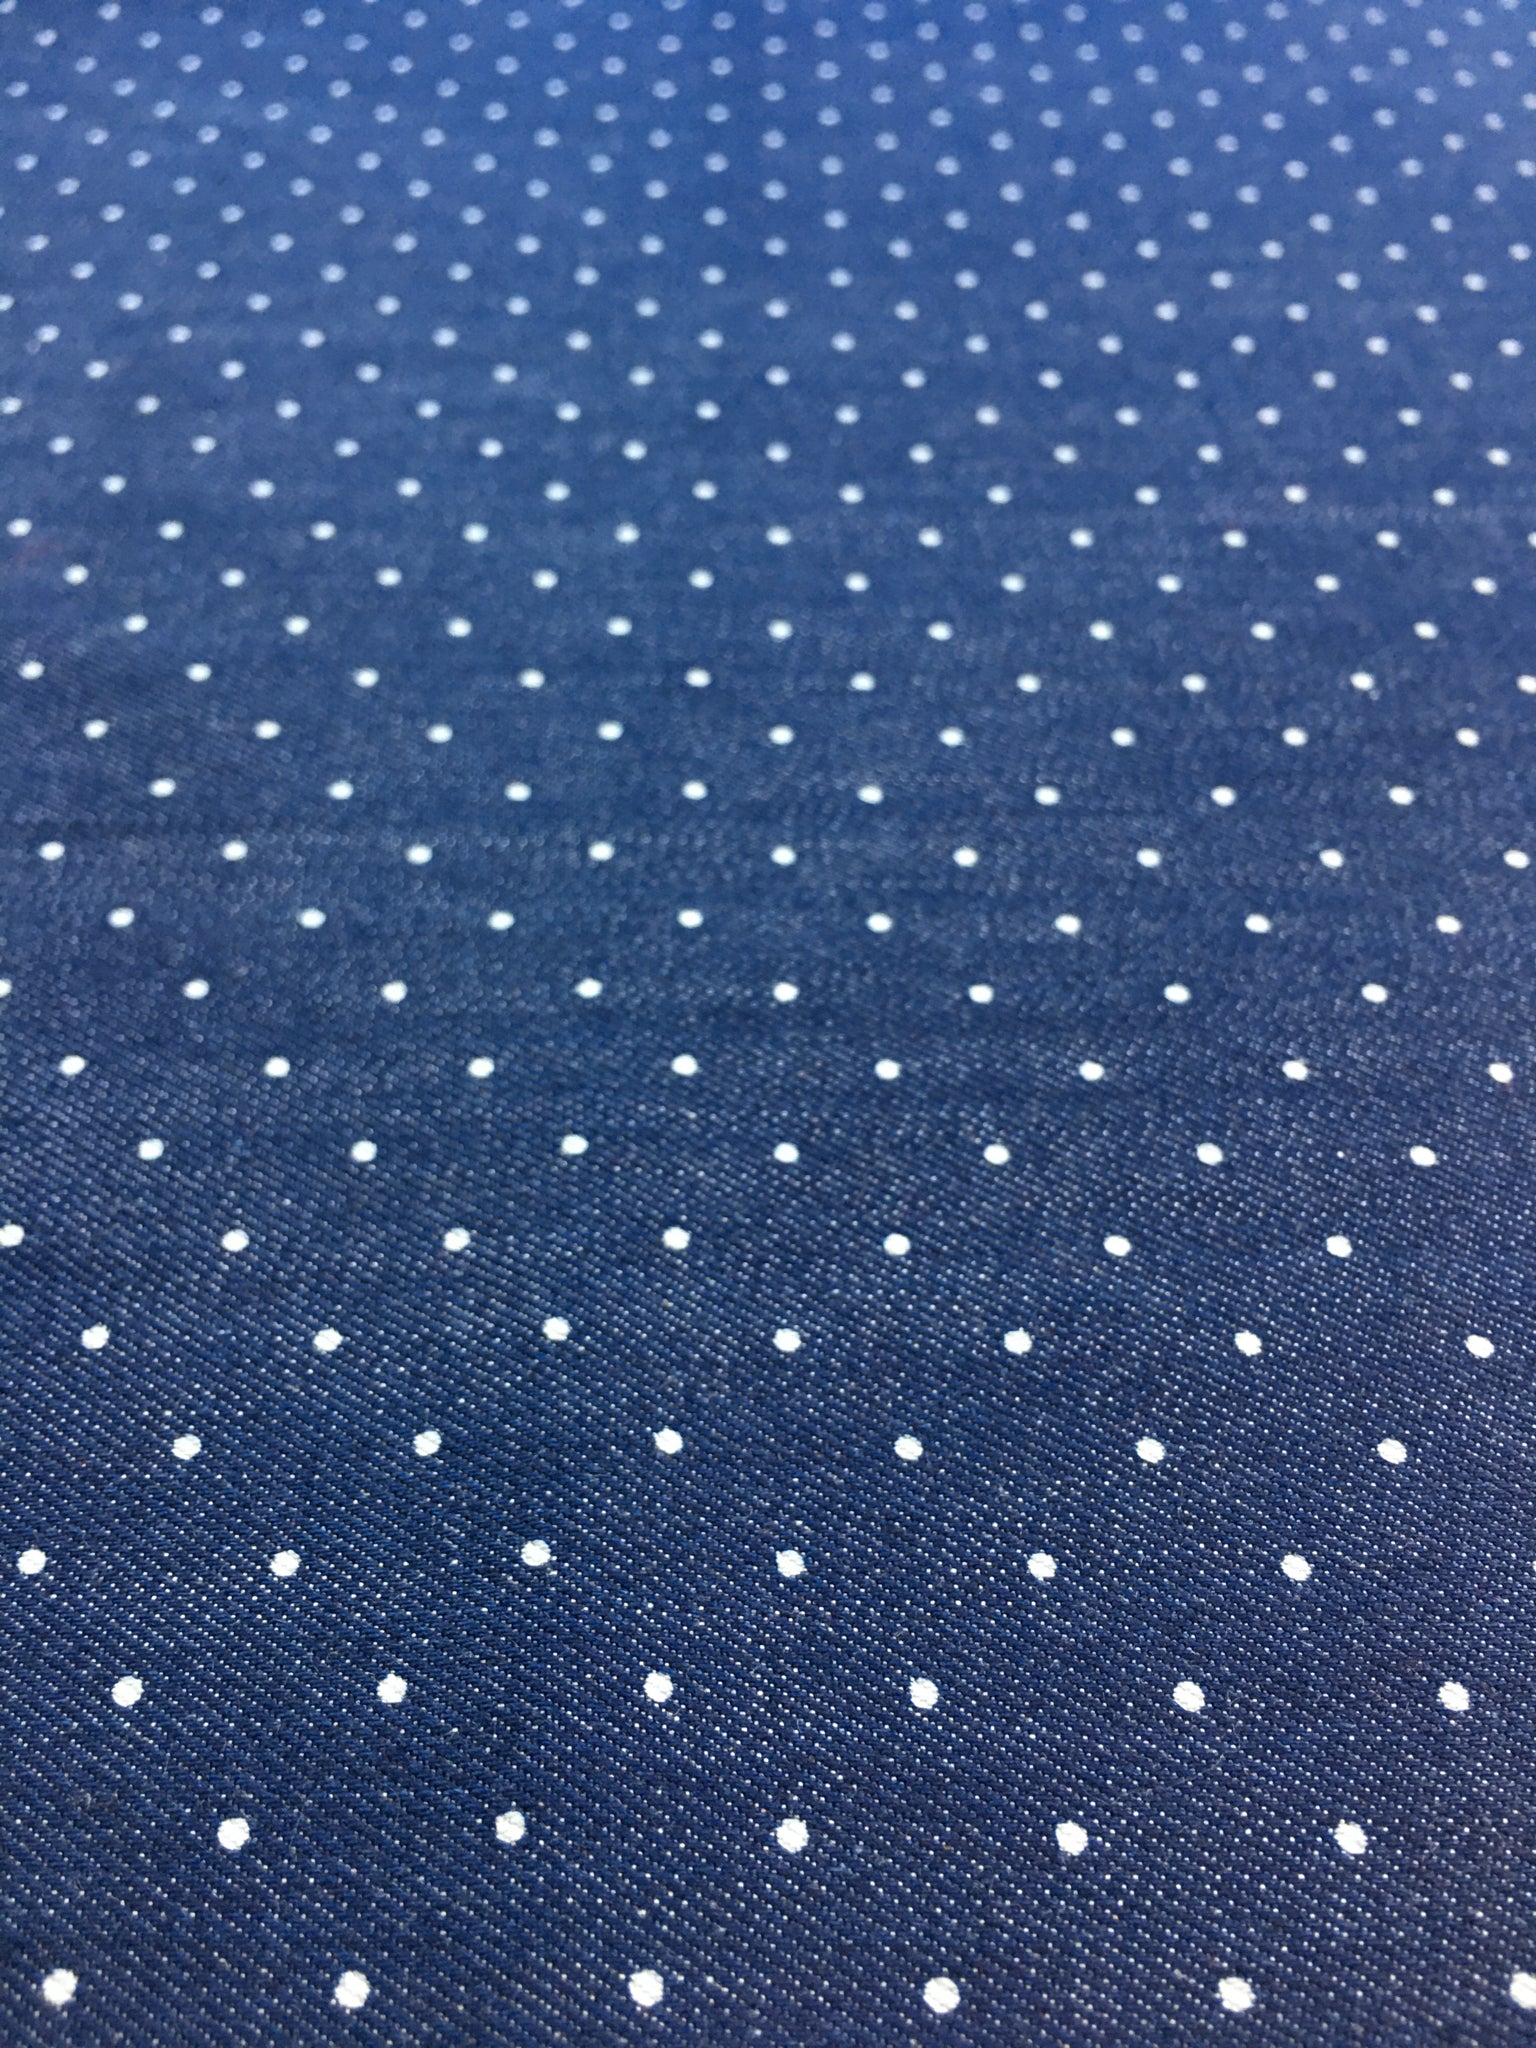 No. 1030 cotton jeans polka dots